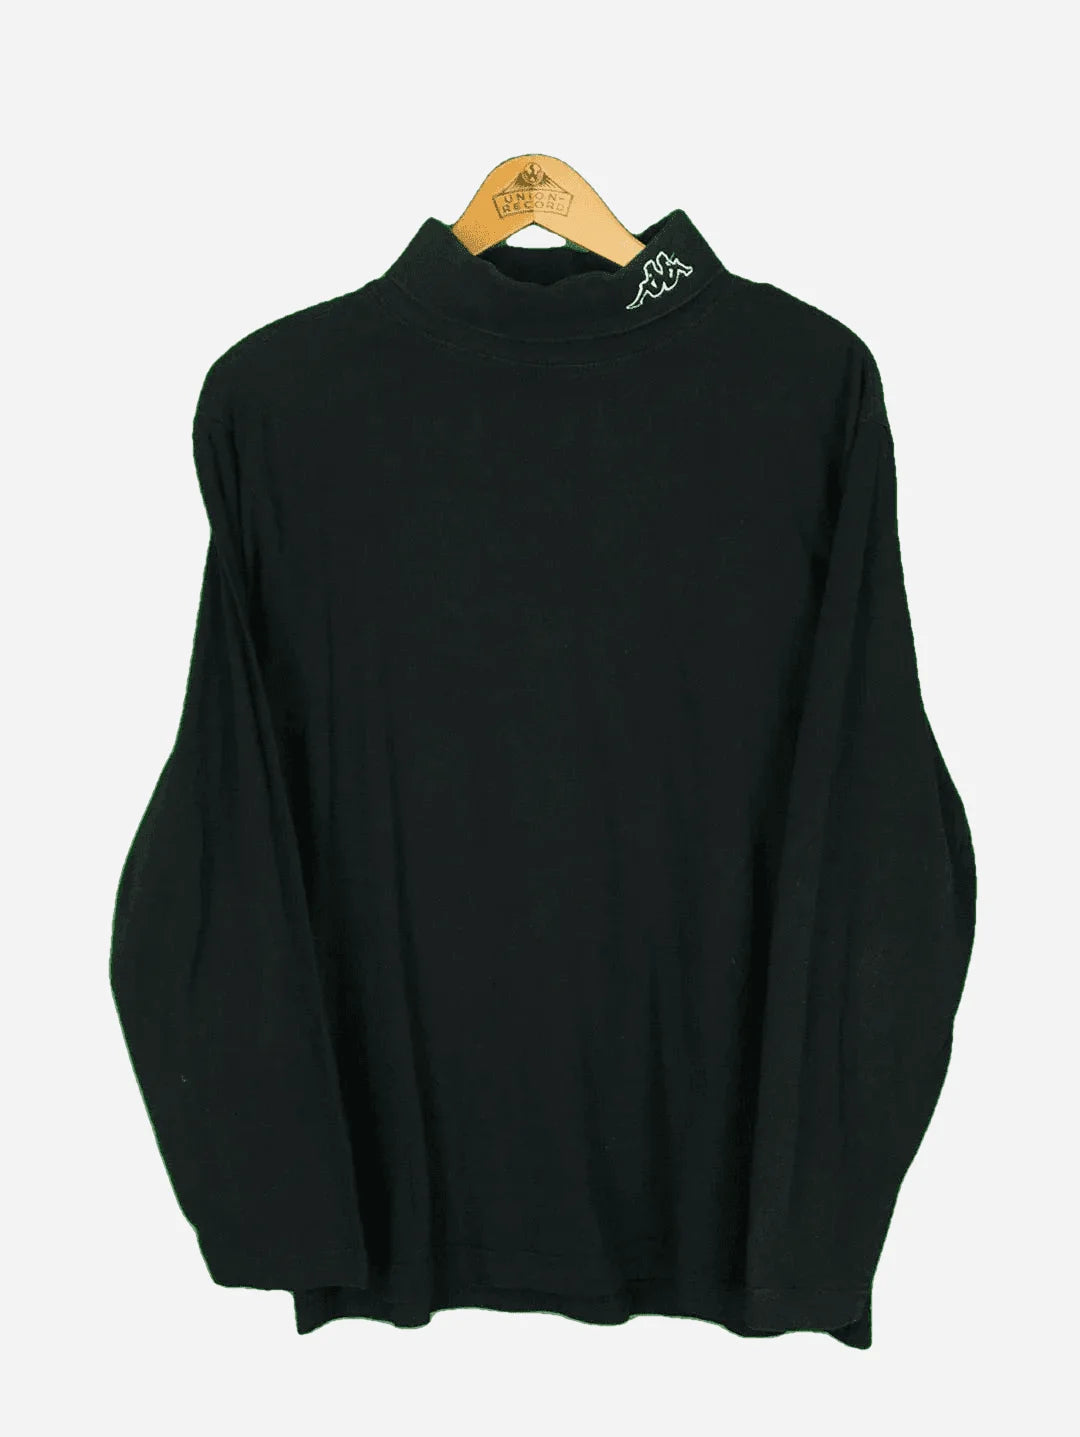 Kappa Turtleneck Sweater (M)